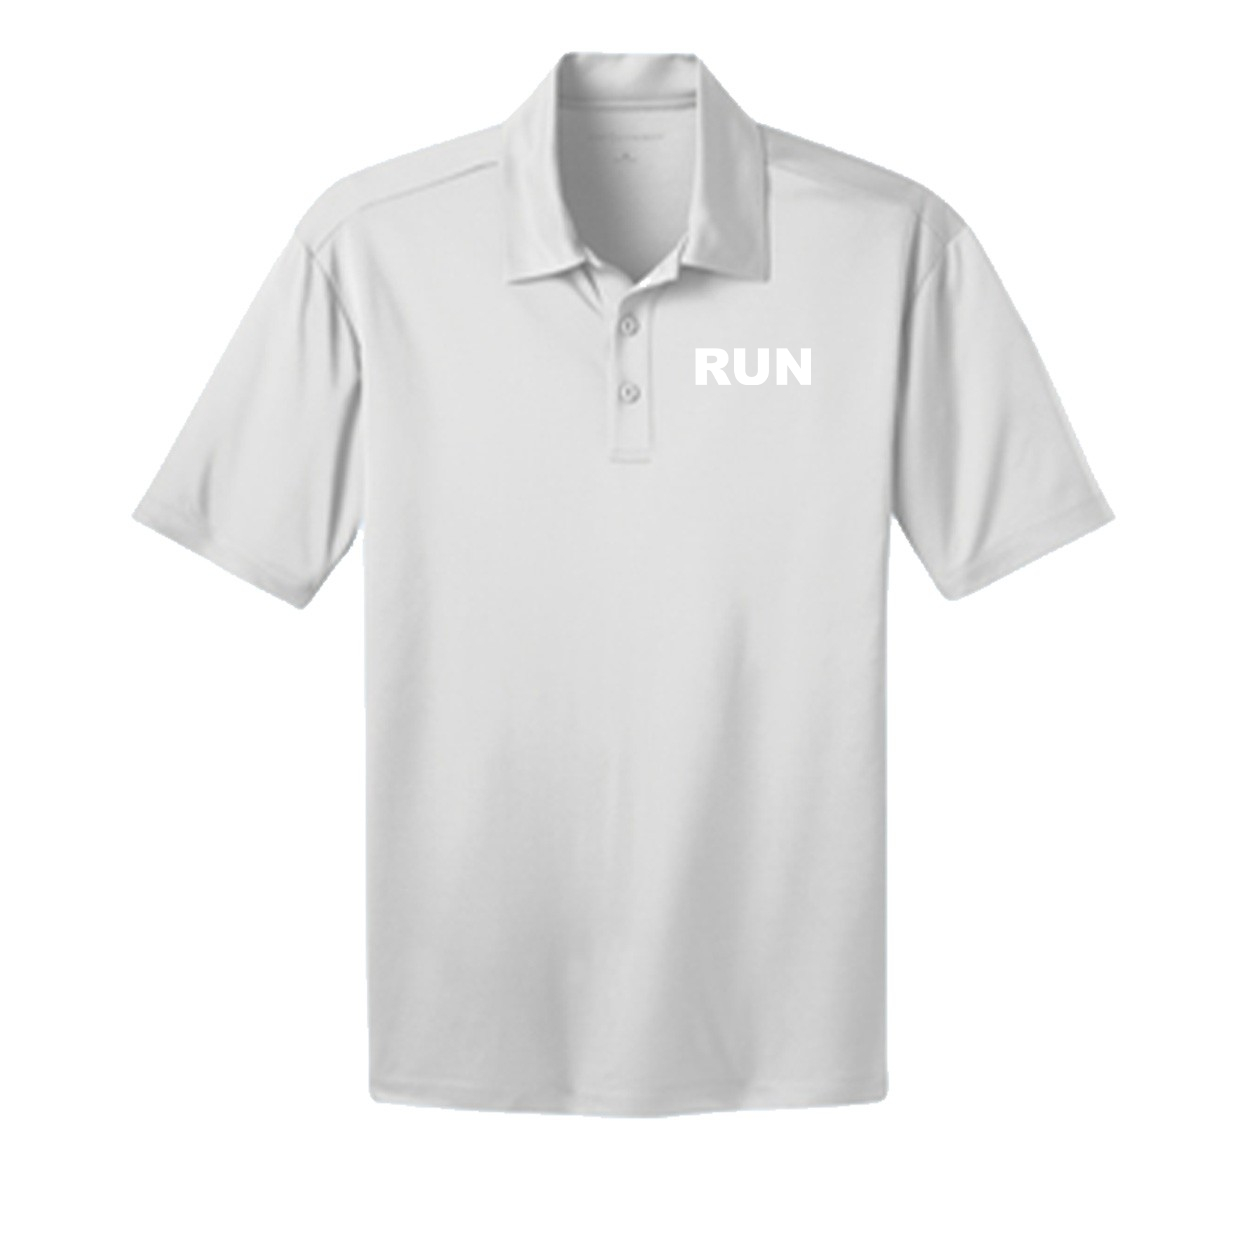 Run Brand Logo Night Out Silk Touch Polo Shirt White 